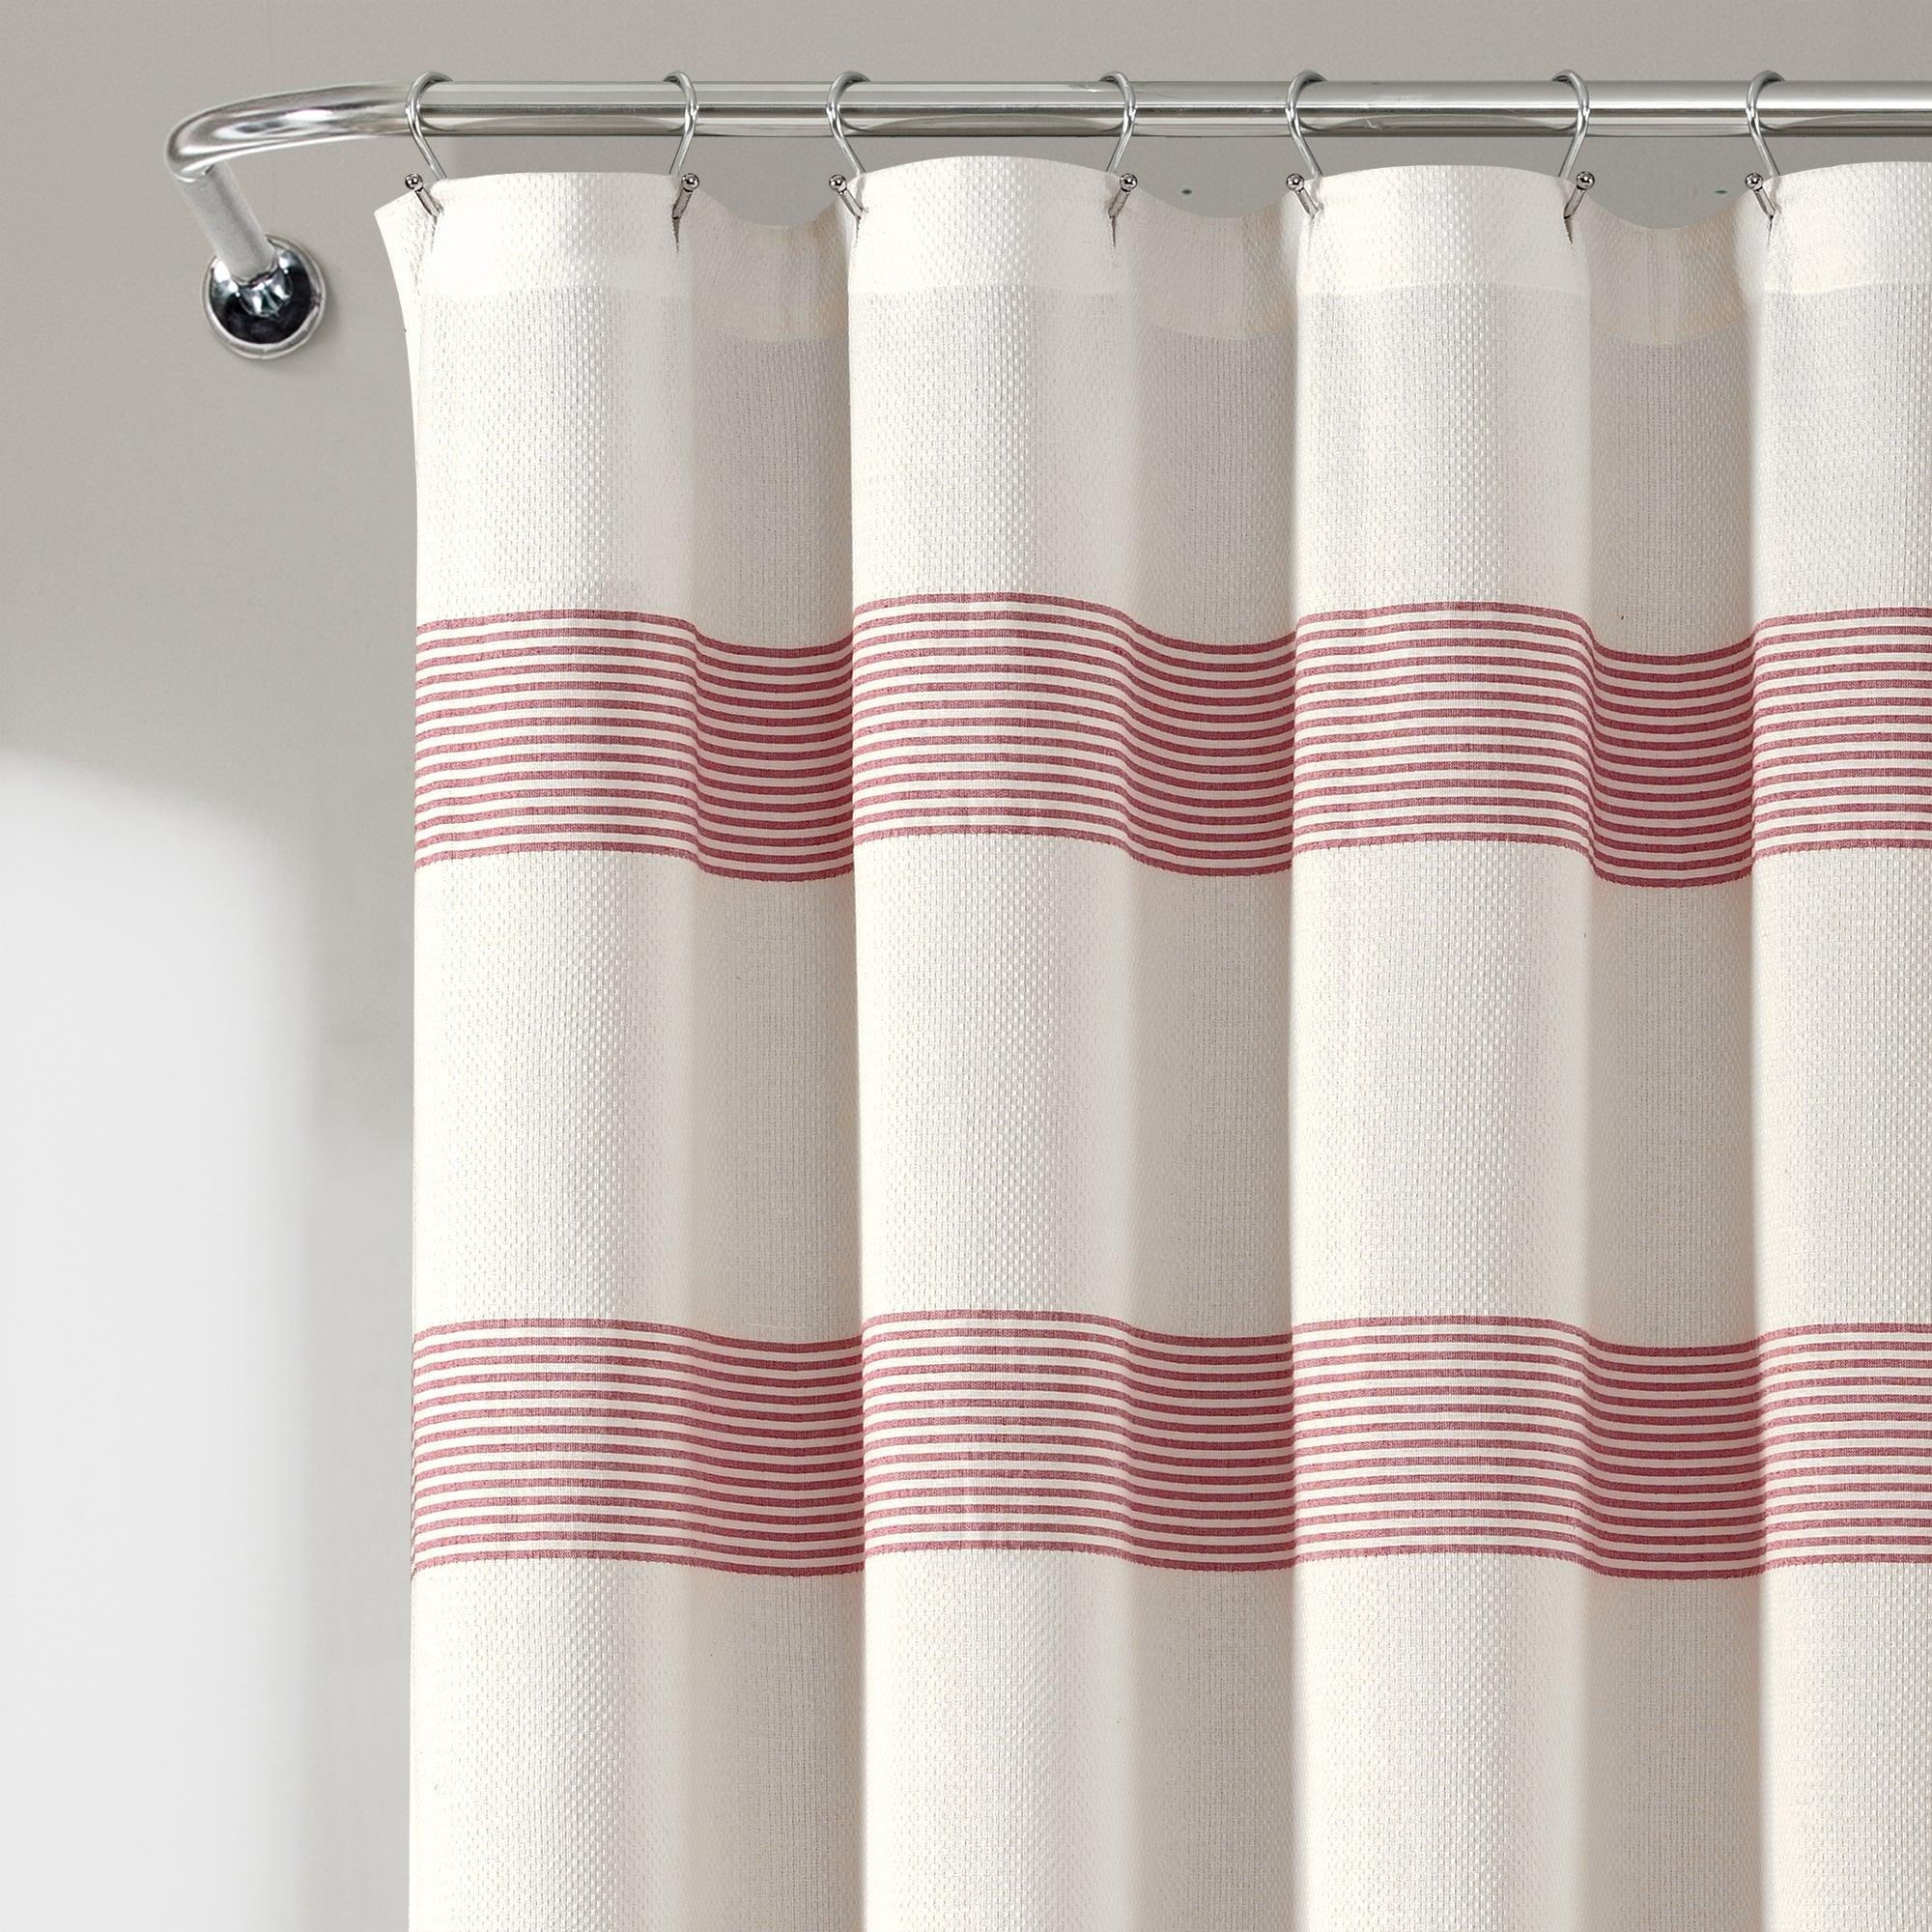 Tucker Stripe Yarn Dyed Cotton Knotted Tassel Shower Curtain